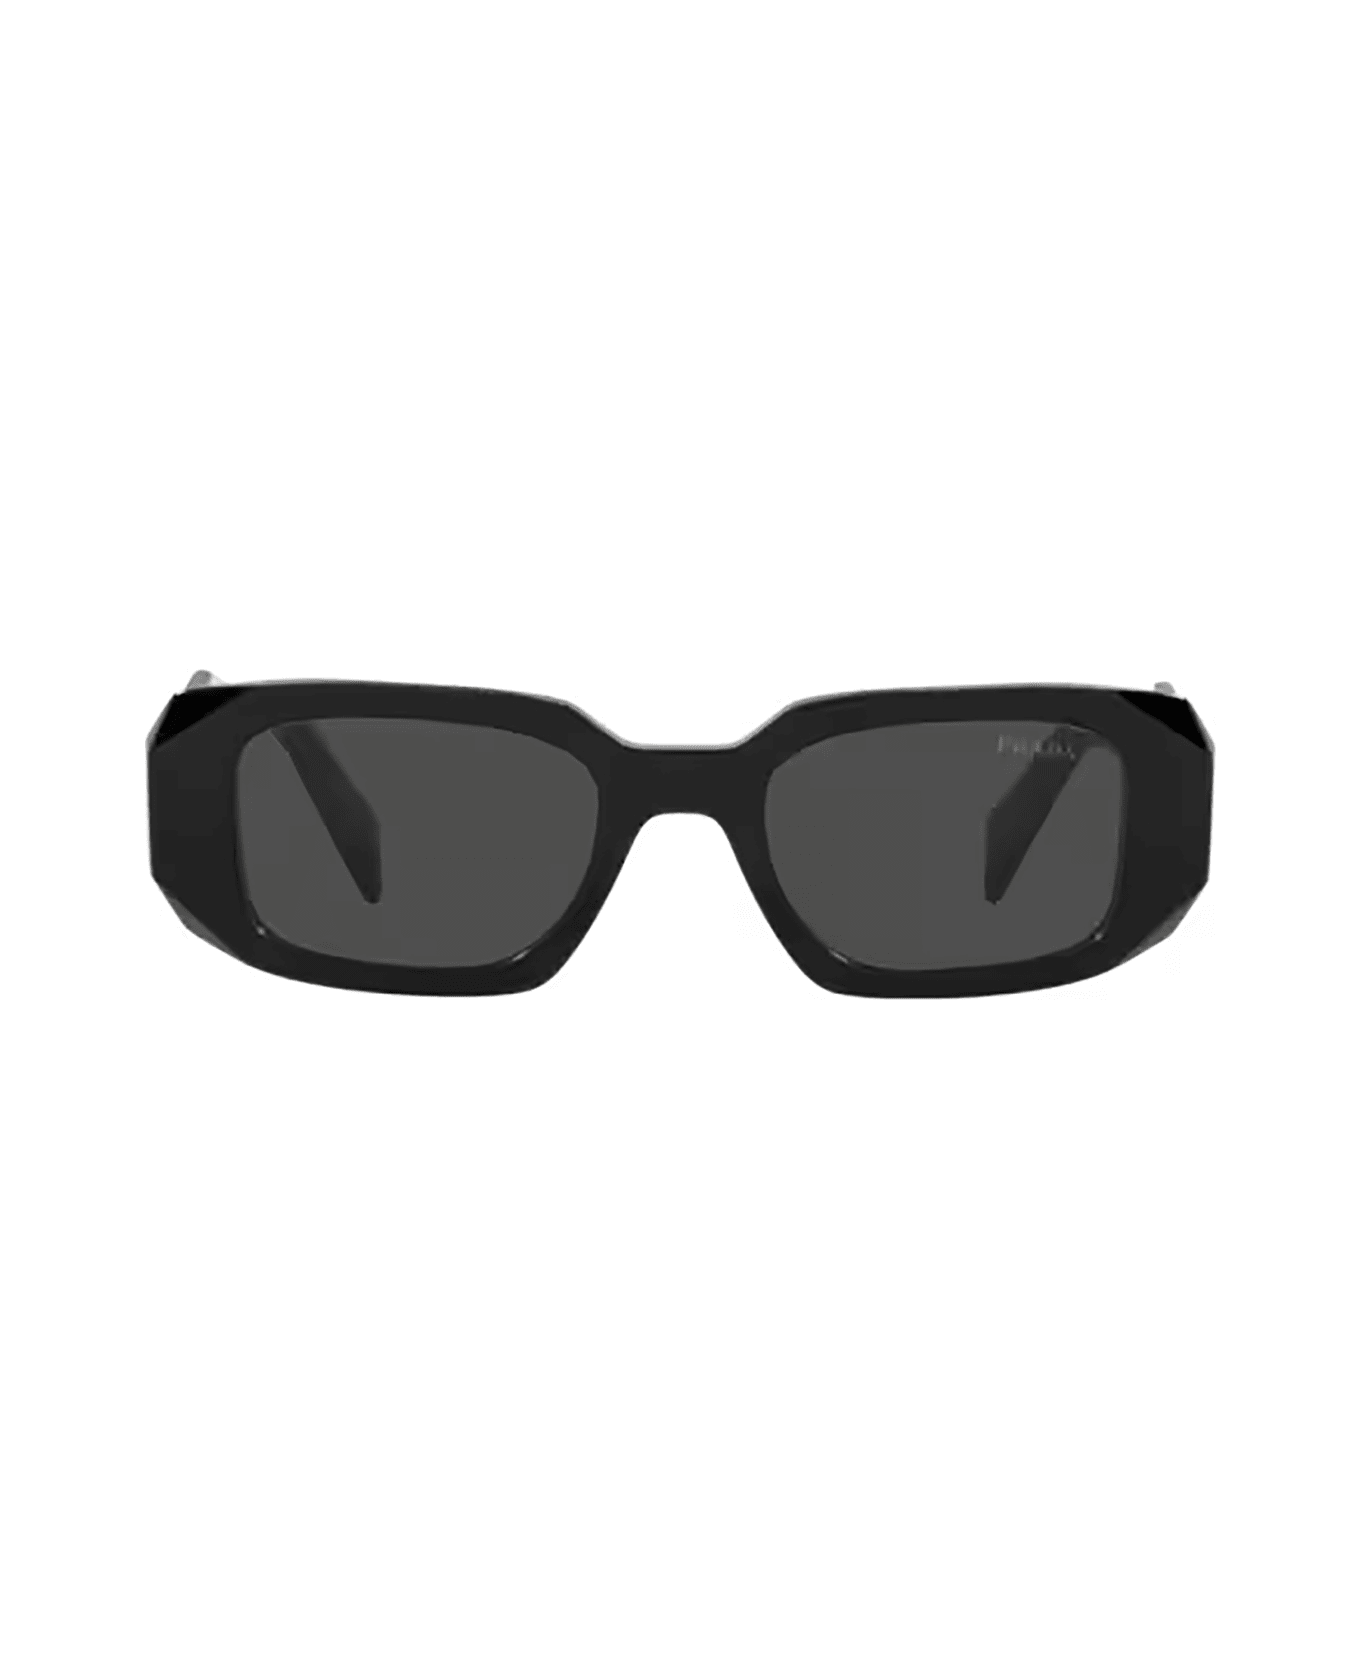 Prada Eyewear Pr 17wsf Black Sunglasses - Black